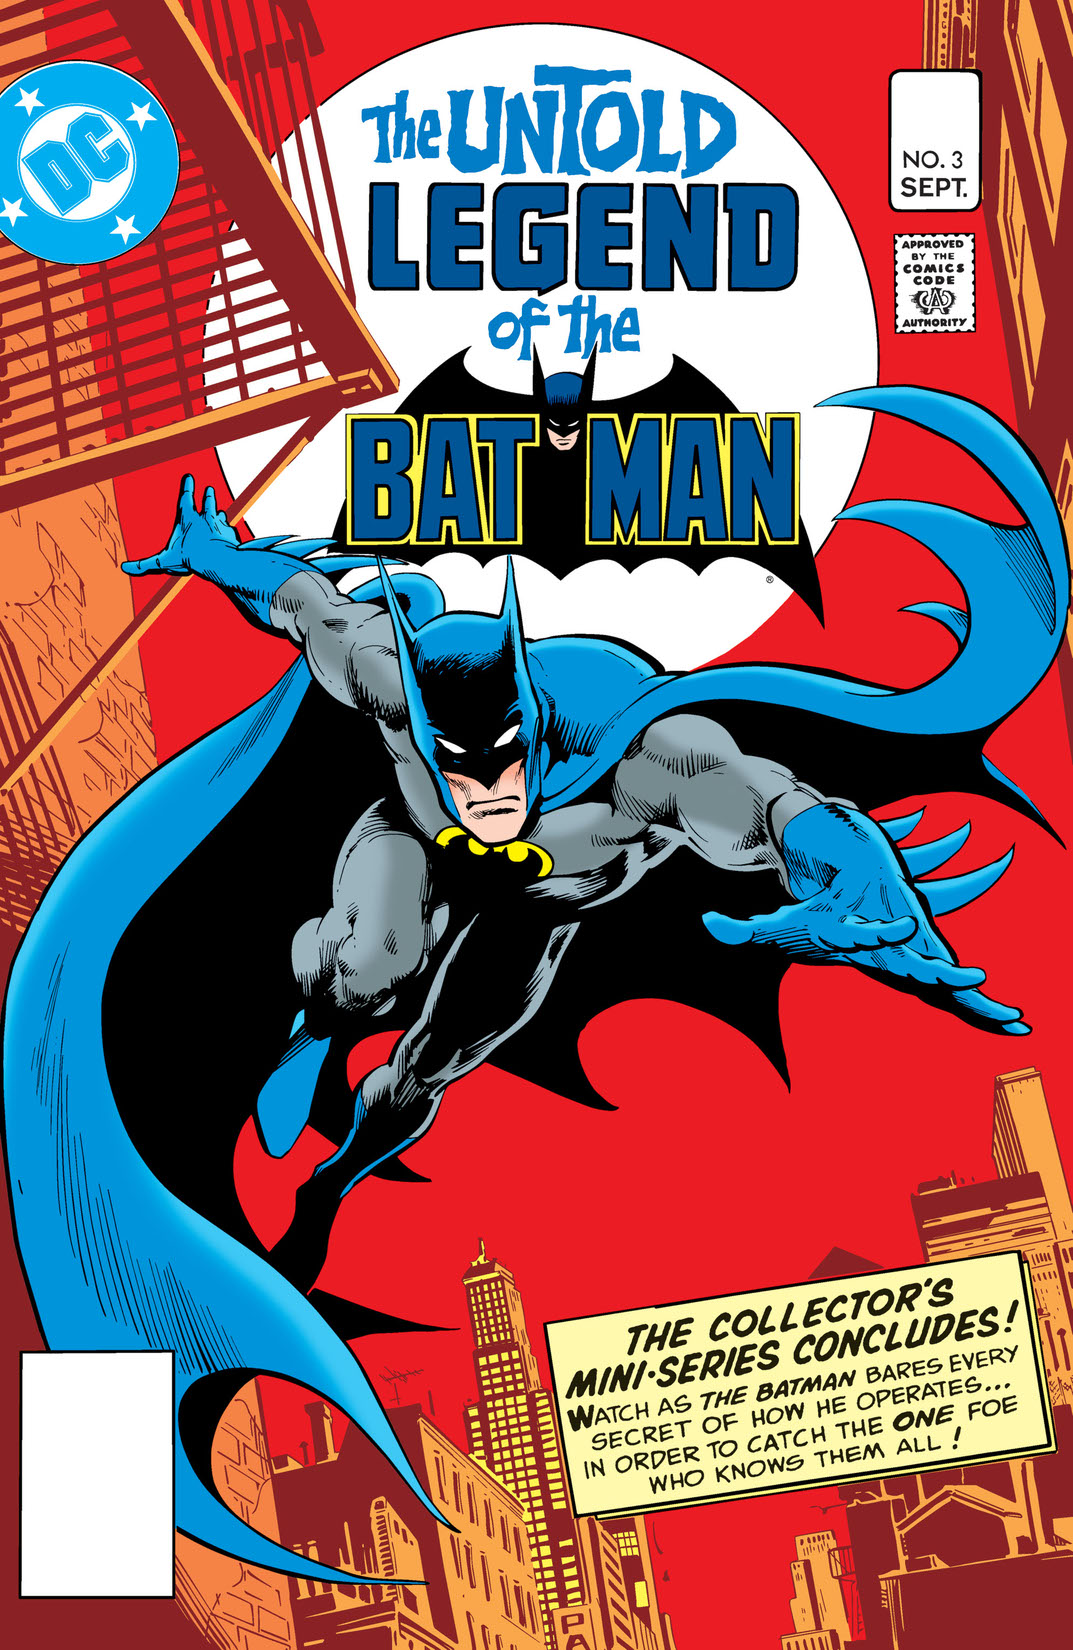 The Untold Legend of the Batman #3 preview images